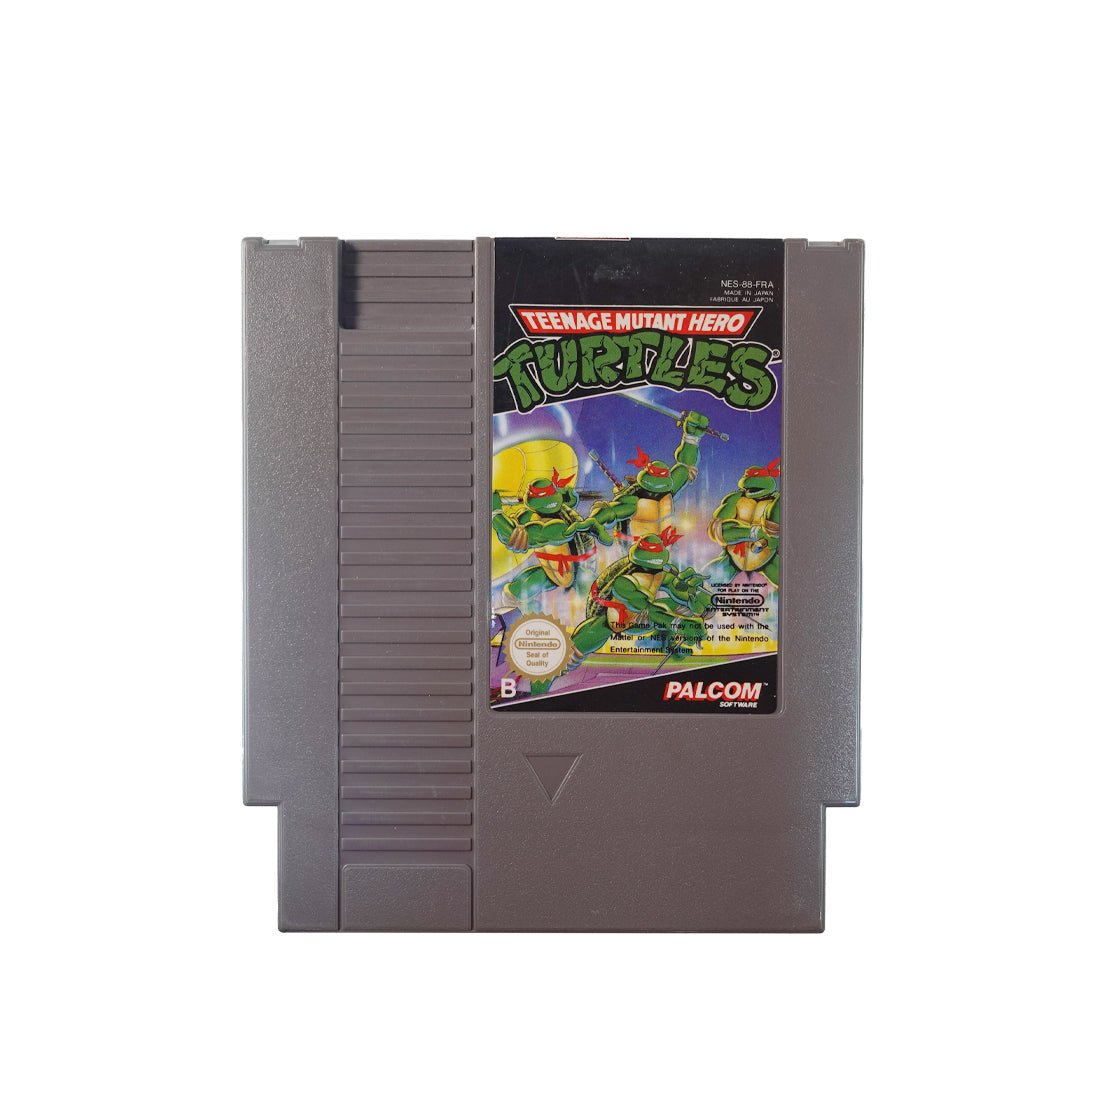 (Pre-Owned) Teenage Mutant Hero Turtles- Nintendo Entertainment System - ريترو - Store 974 | ستور ٩٧٤